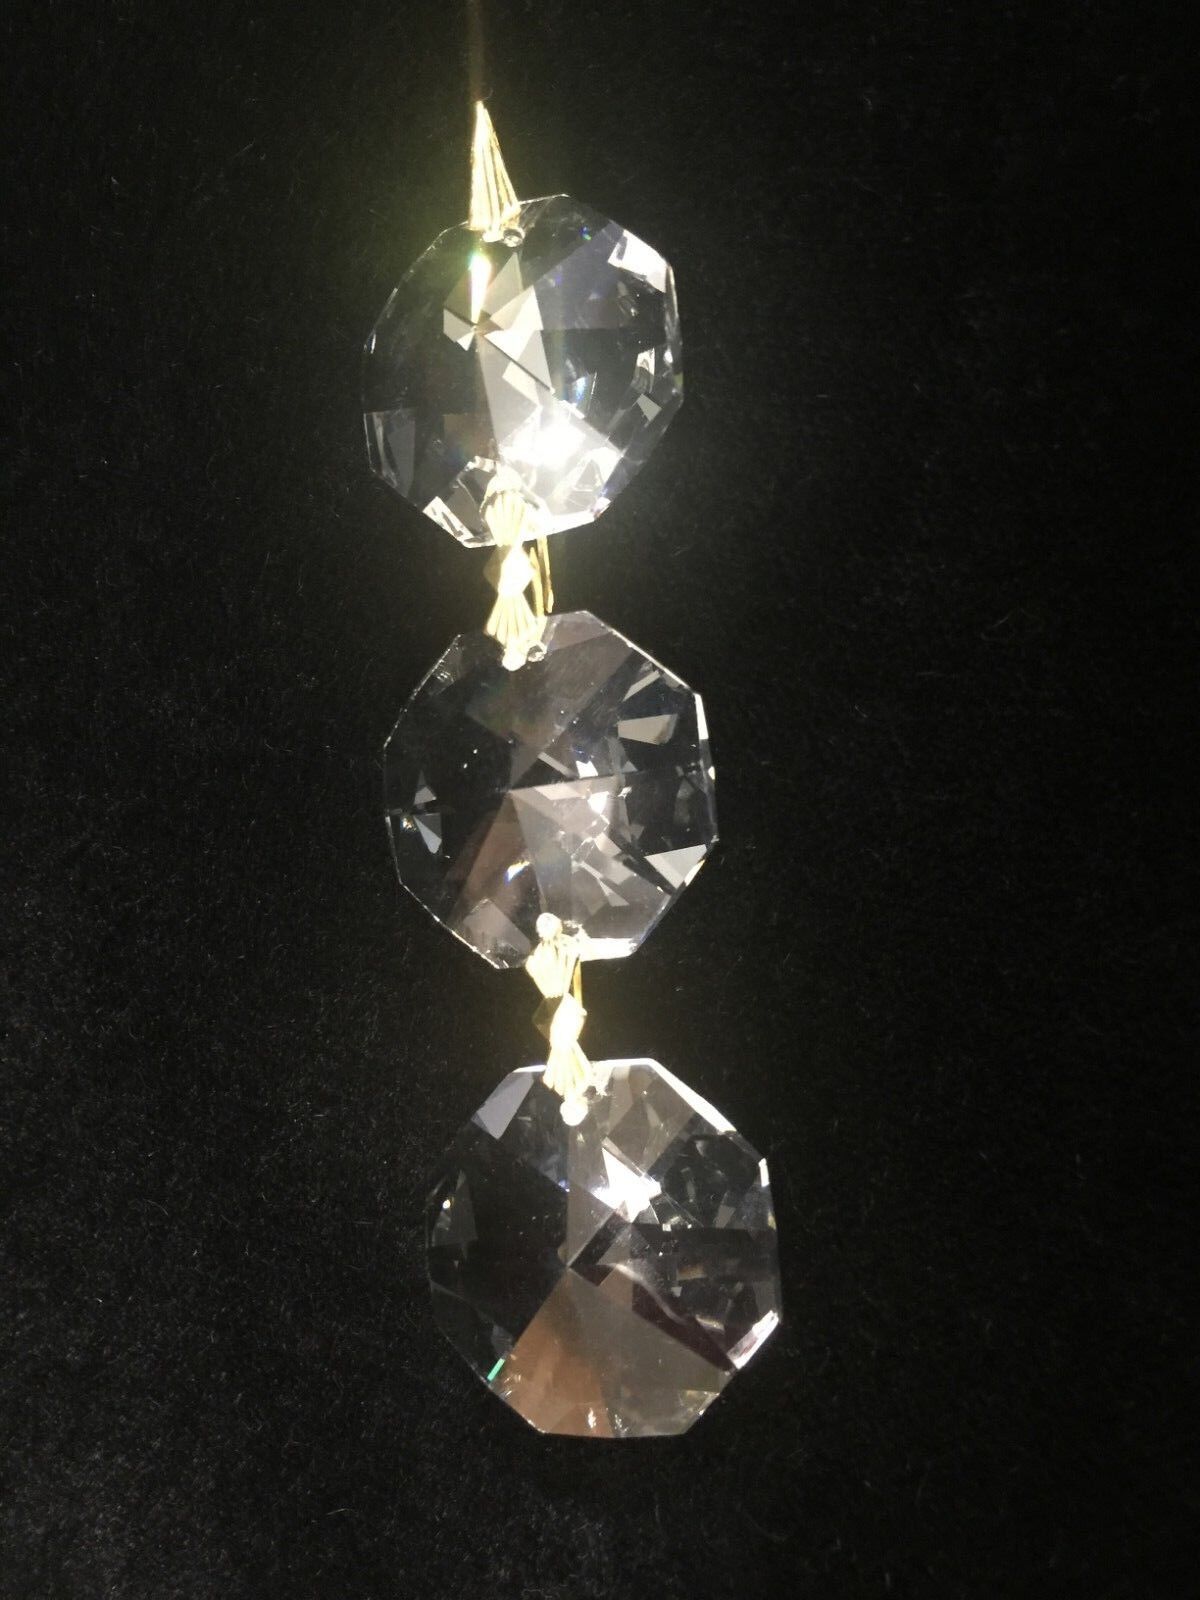 Swarovski Strass Art 8002 Crystal Chandelier 3 Beads Lamp Parts, 1 1/4